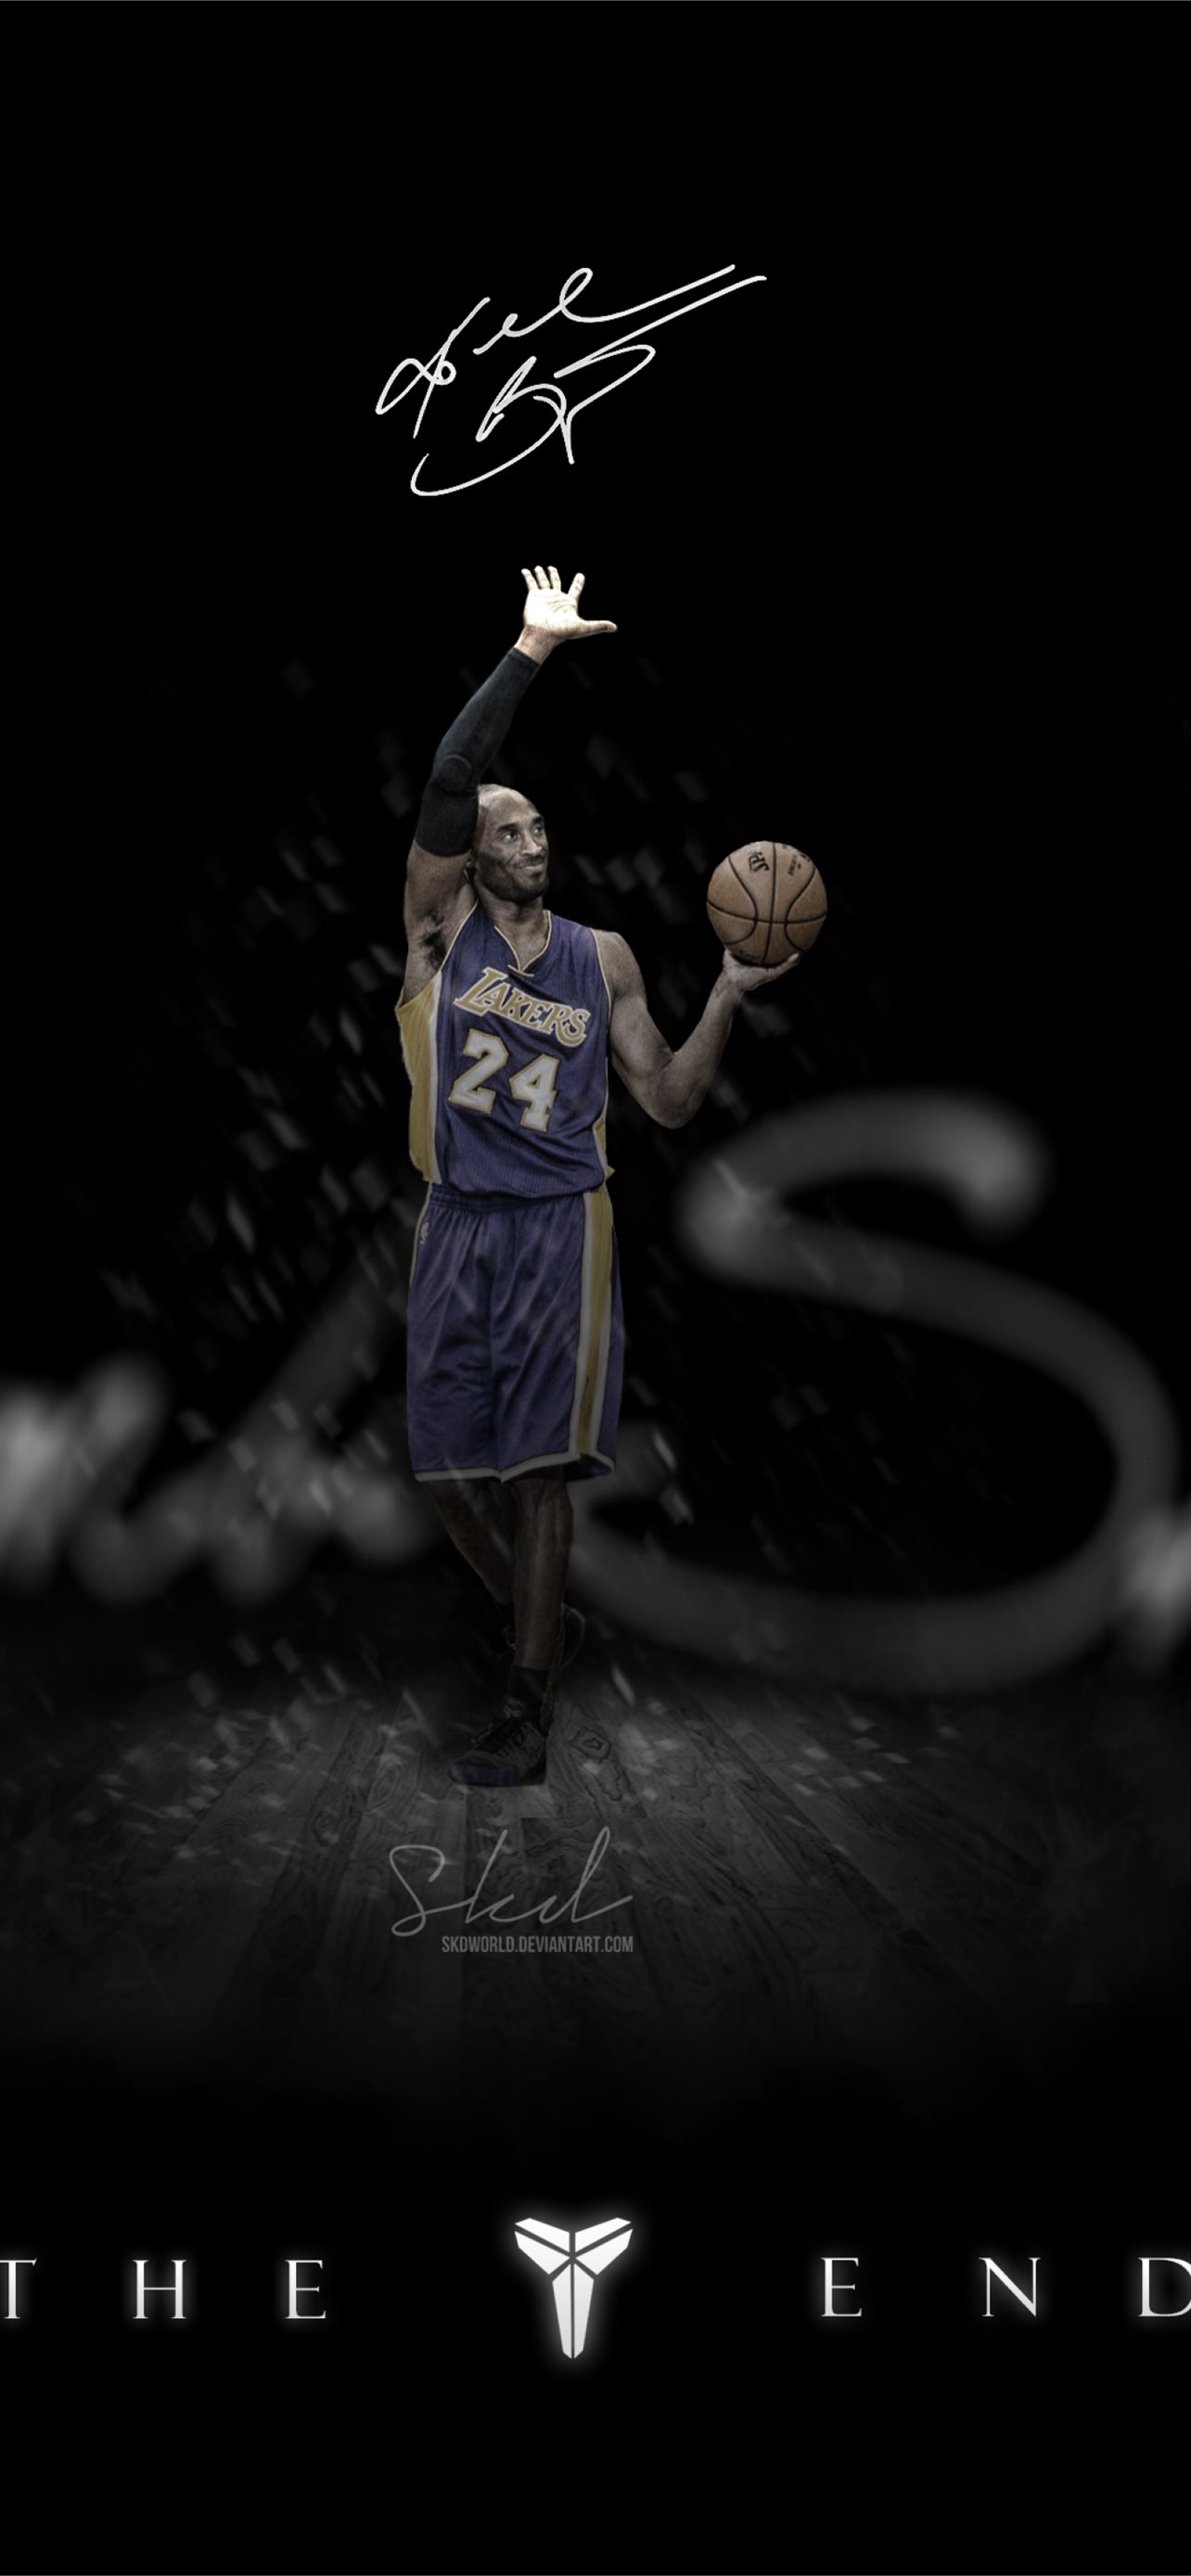 Los Angeles Lakers Kobe Bryant Basketball Player N. iPhone Wallpaper Free Download